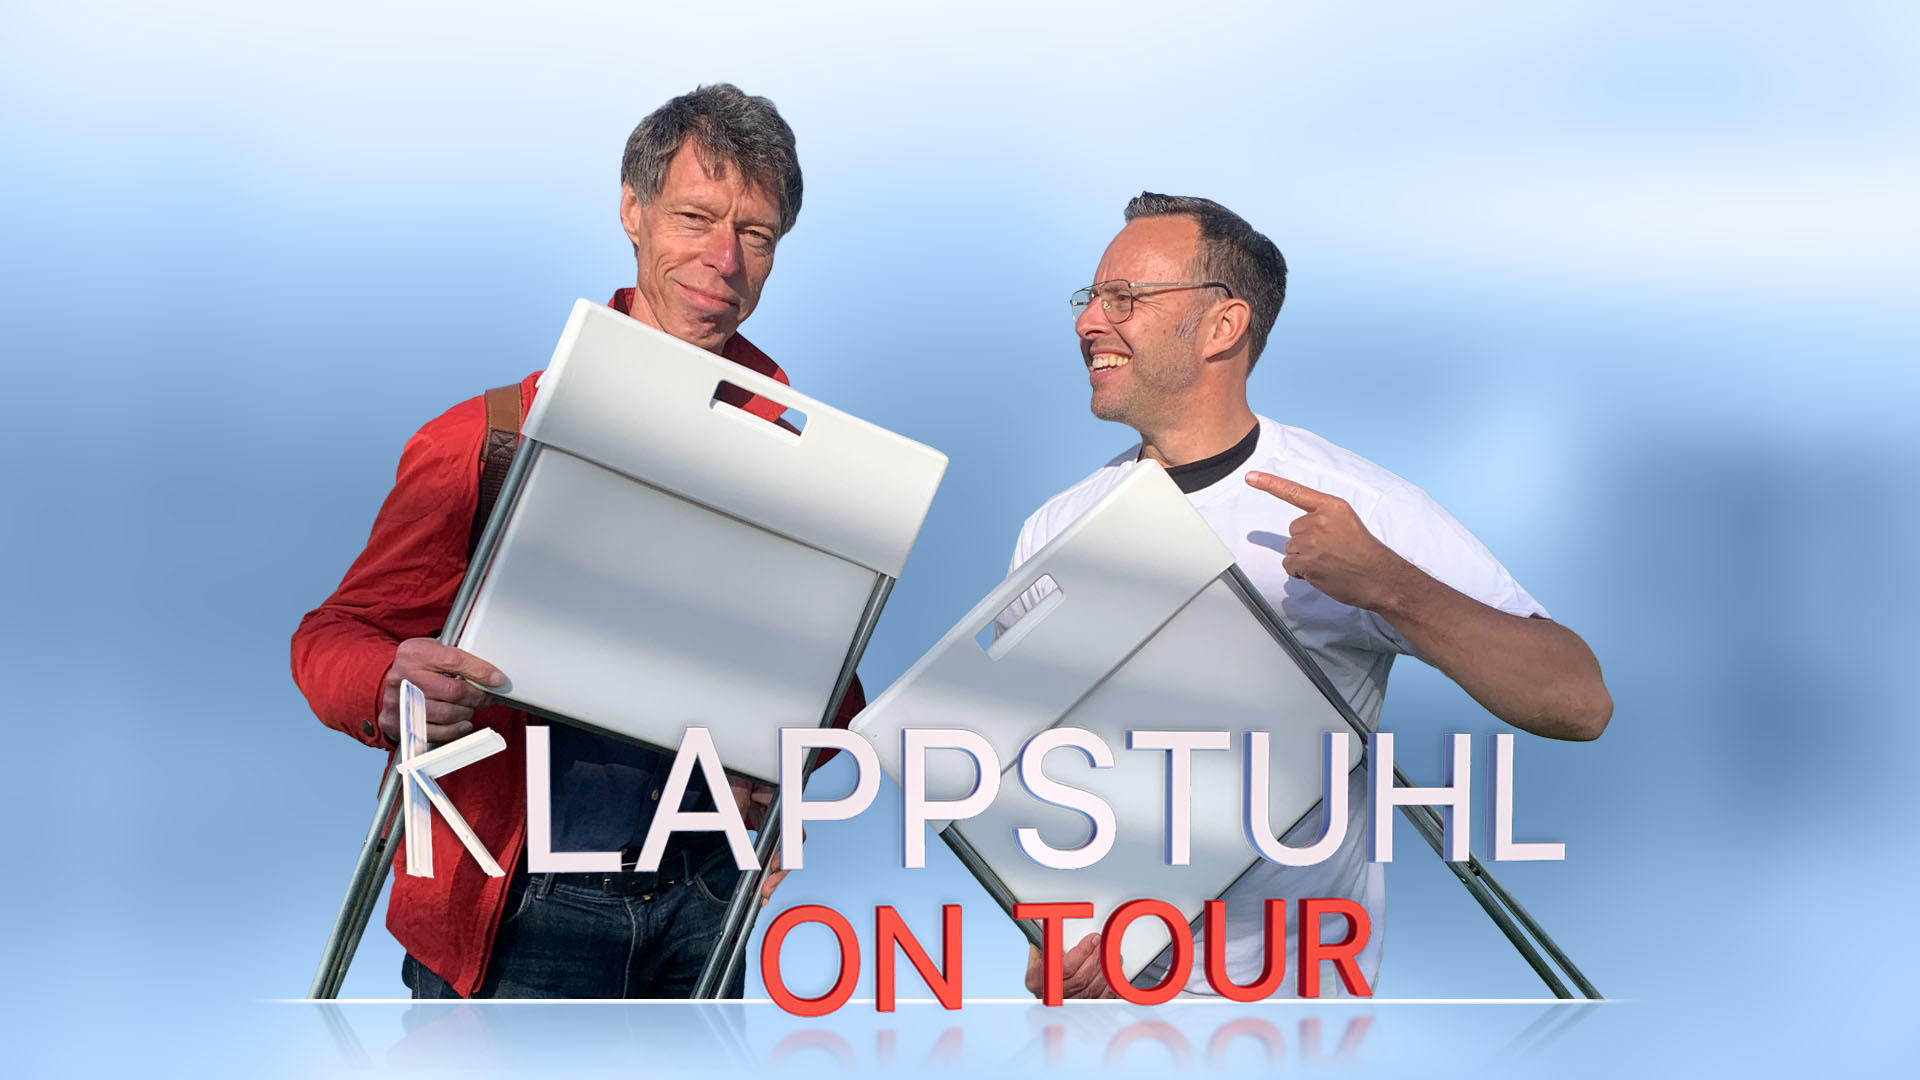 Till Quitmann trifft Comedian Maddin Klappstuhl on Tour